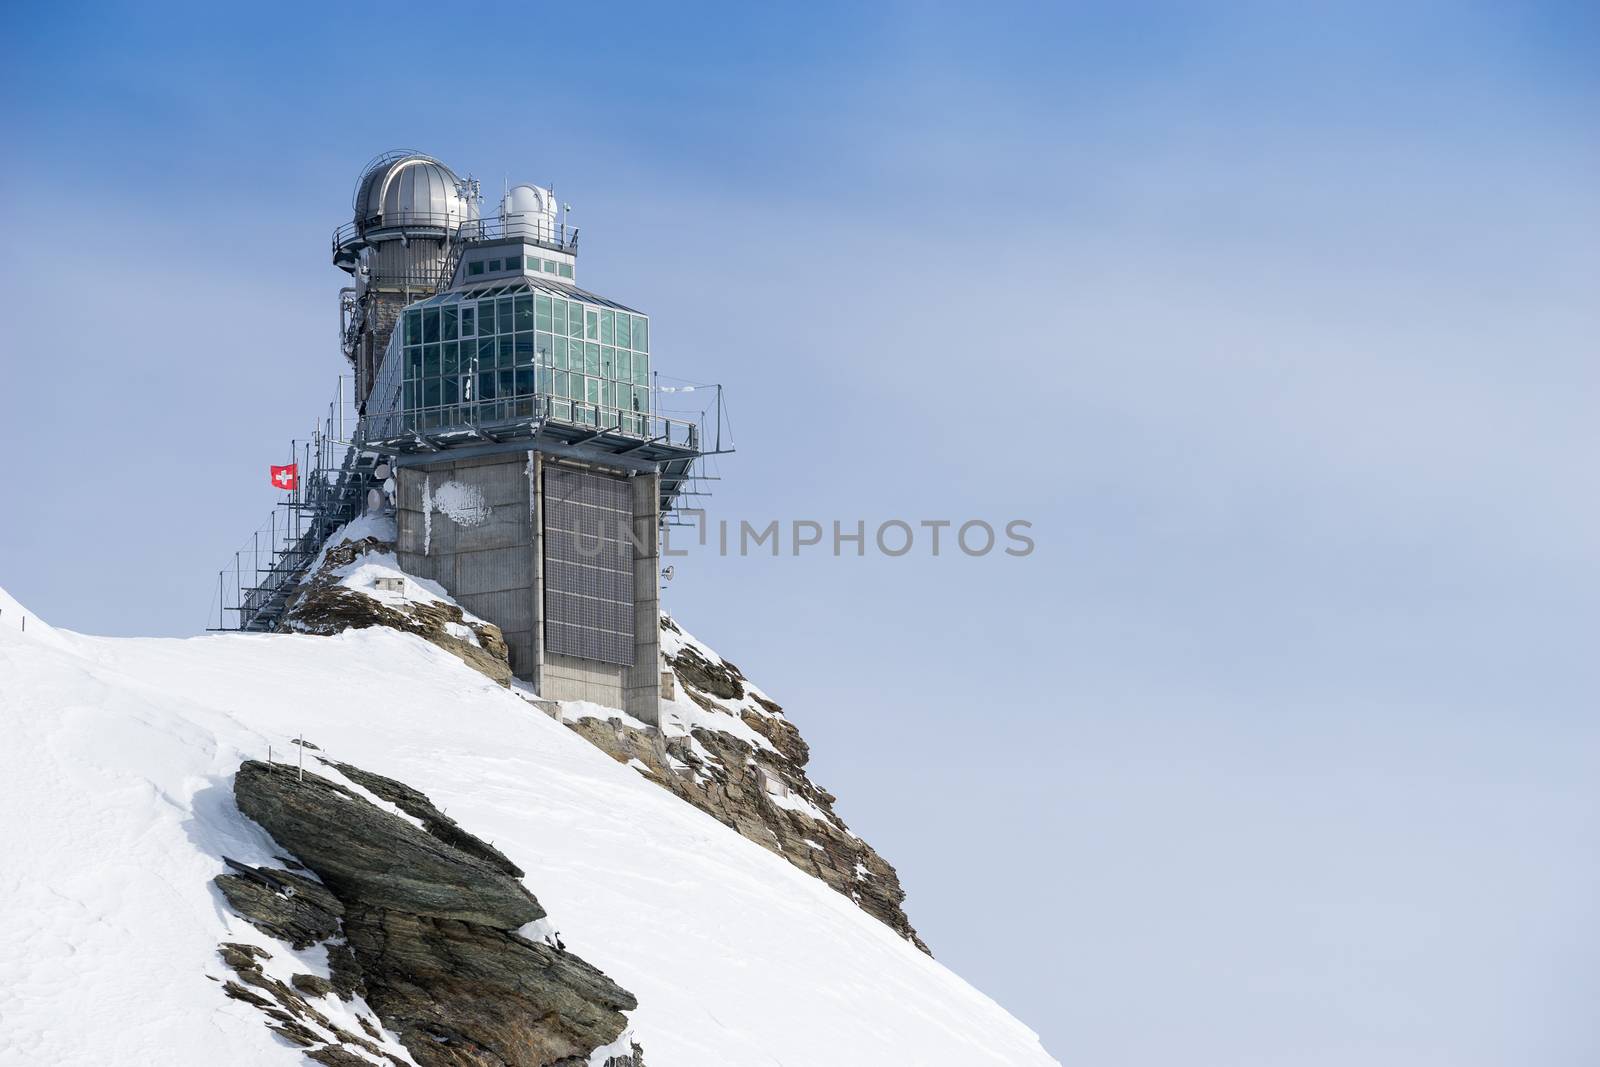 Swiss mountain, Jungfrau, Switzerland, ski resort  by Alicephoto